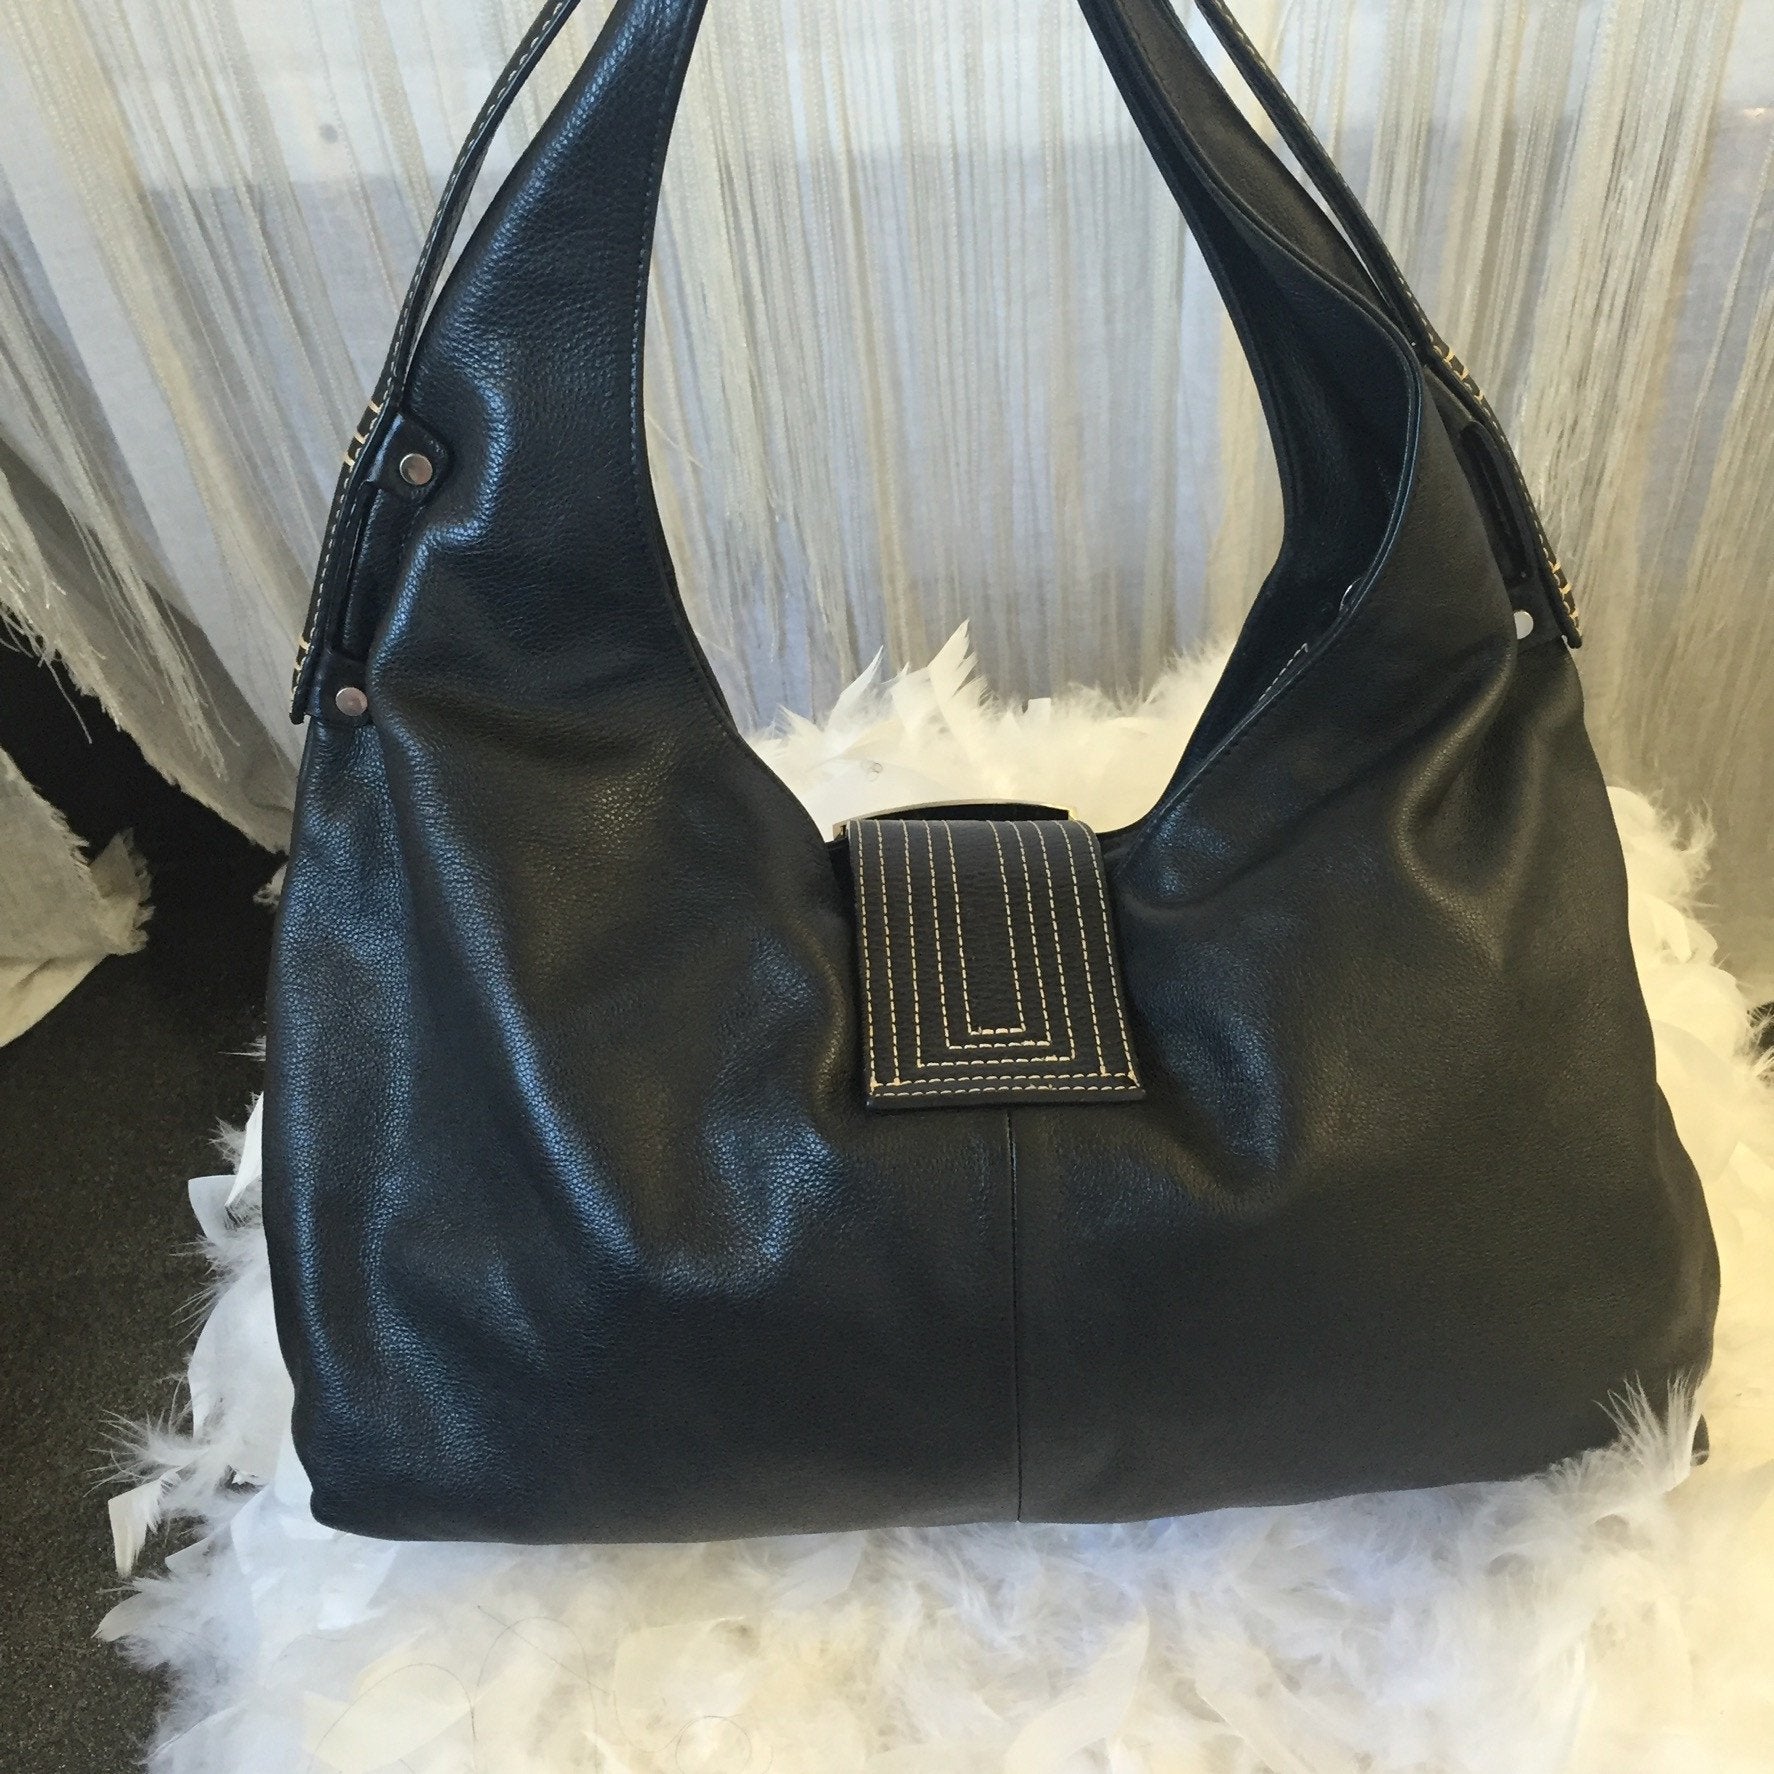 Dissona Bag Wide Shoulder Strap Handbag2021New Women's Chic Bag